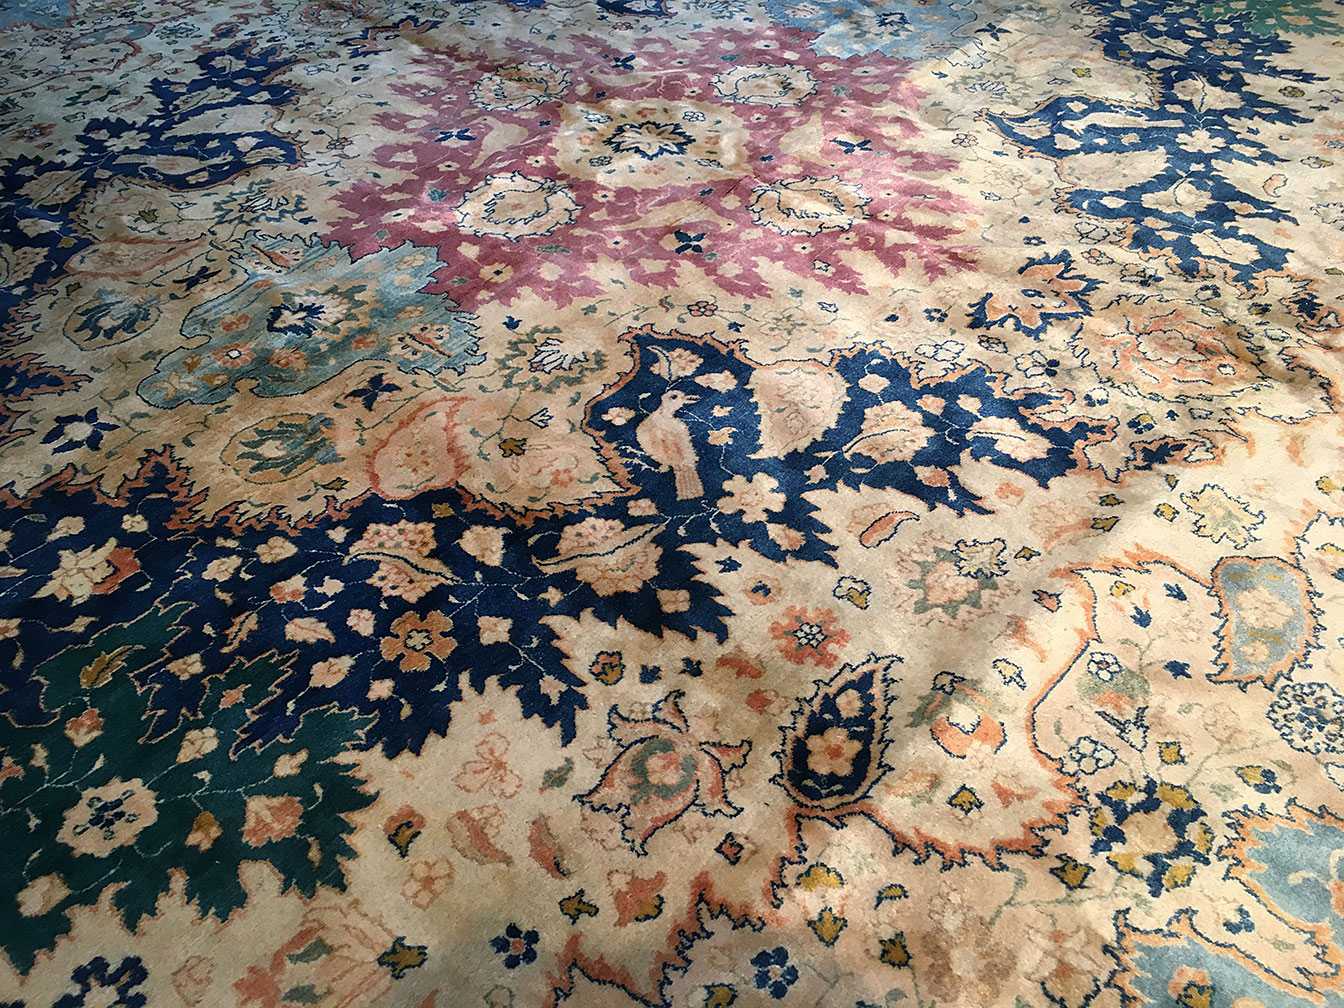 Antique tabriz Carpet - # 53070